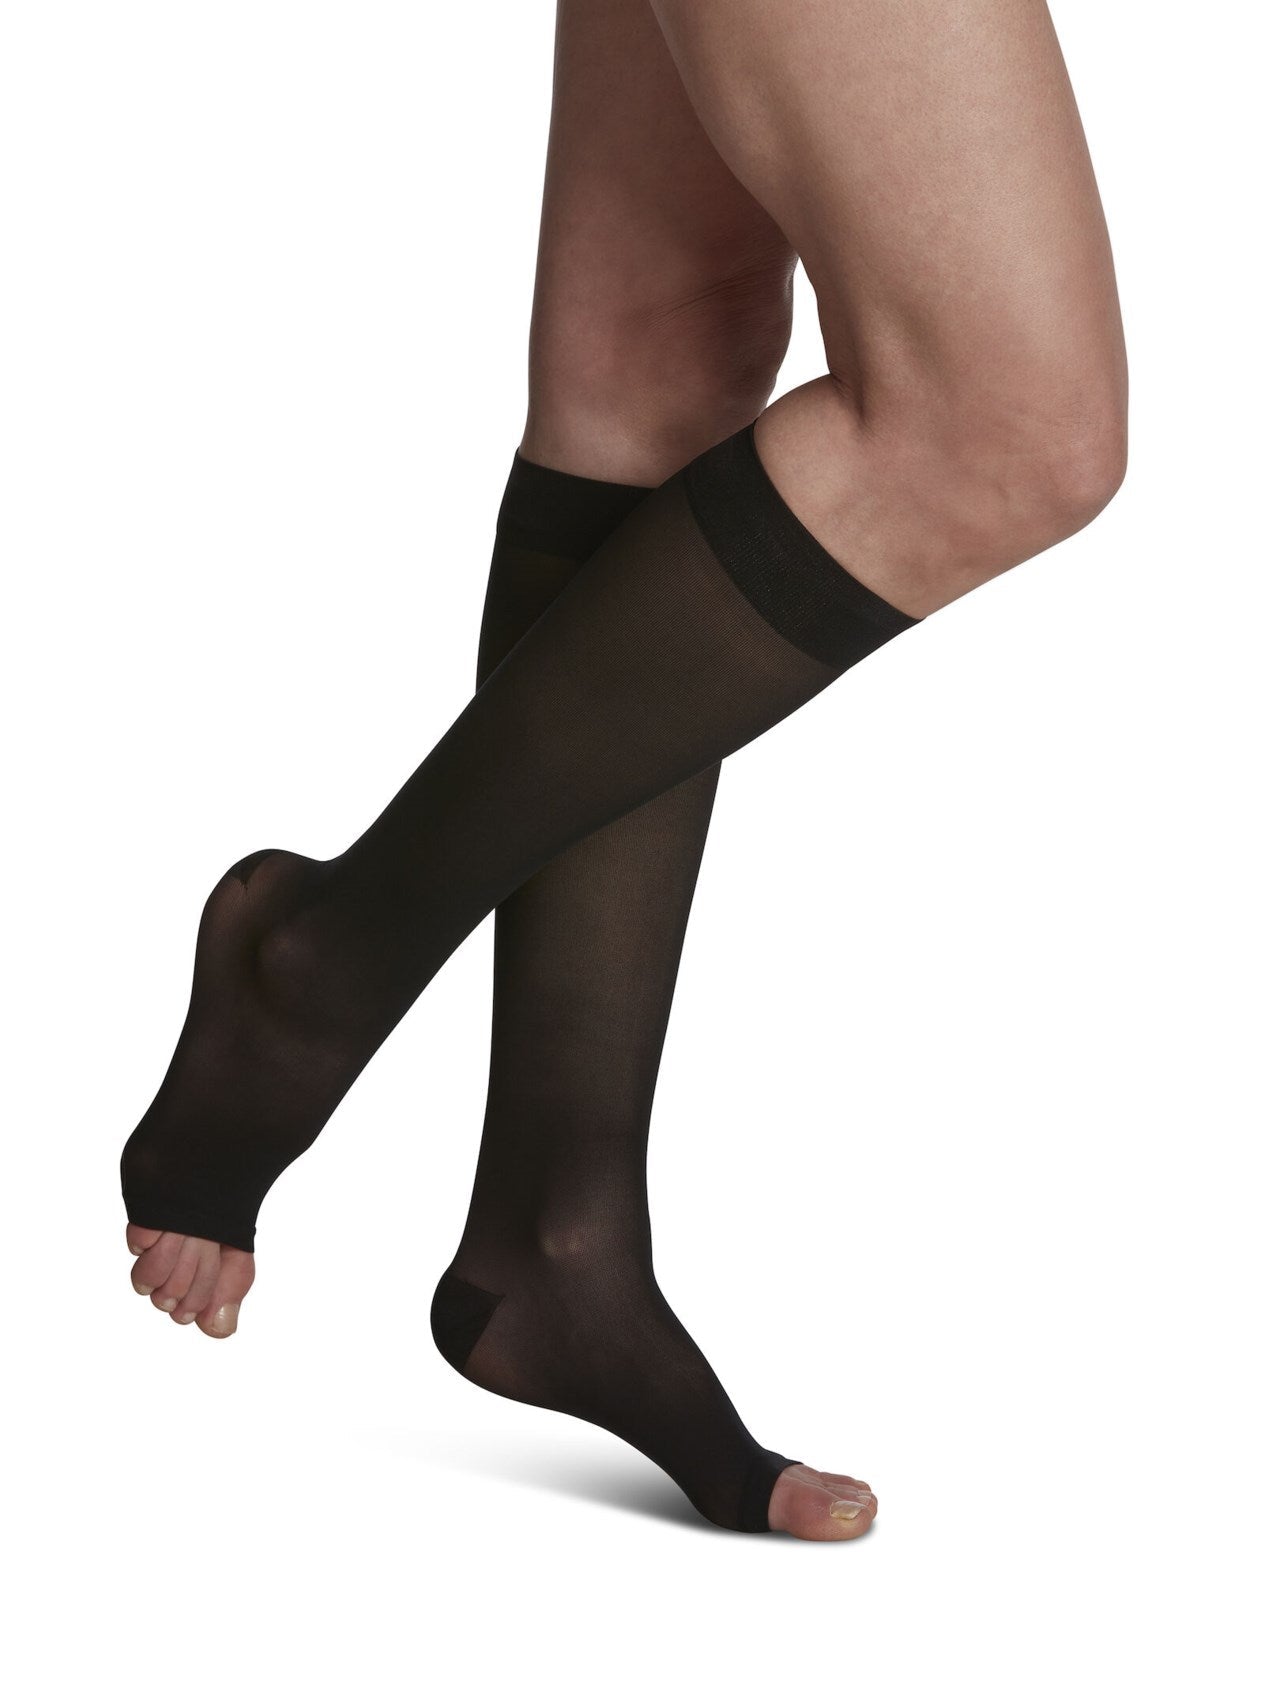 Sigvaris 780 Sheer Compression Socks 15-20 mmHg Calf High for Women Open Toe